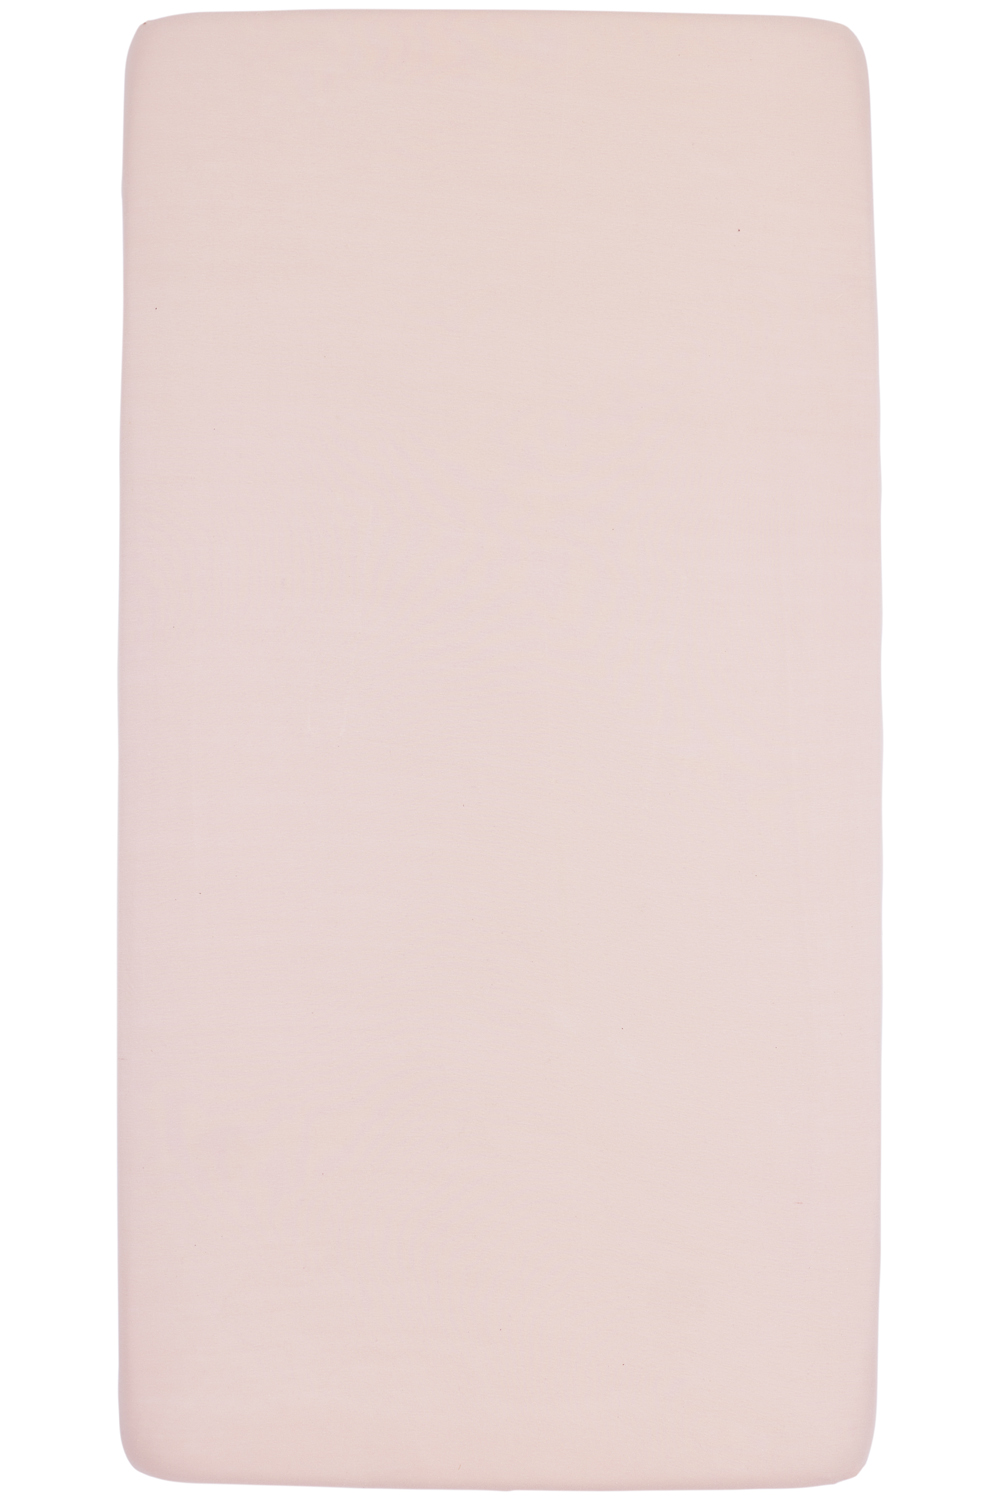 Jersey Hoeslaken Ledikant - Soft Pink - 60x120cm